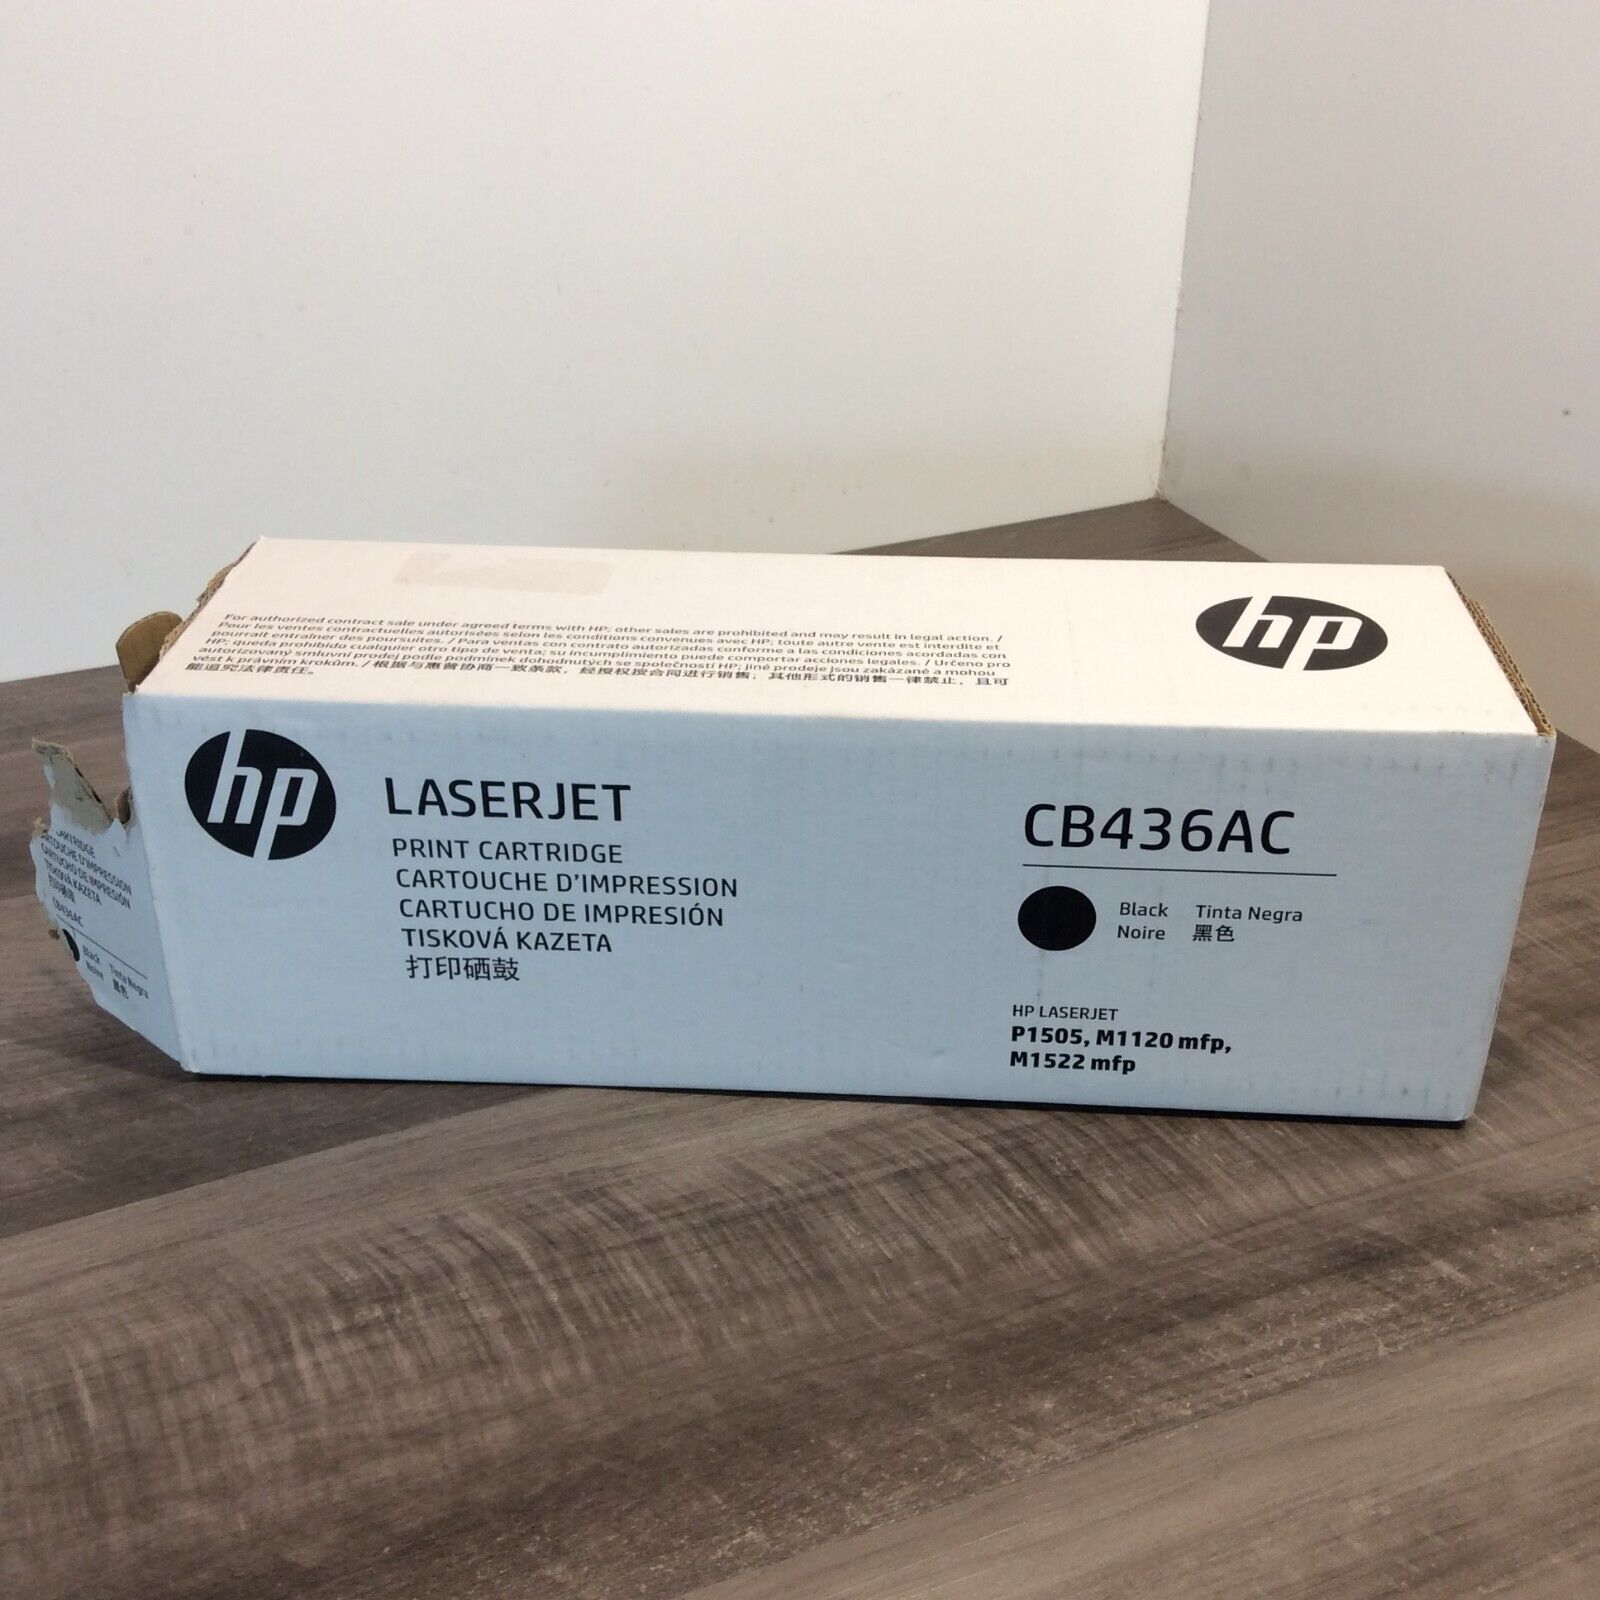 Genuine HP Black Toner Print Cartridge CB436AC - Open Box / Sealed Plastic